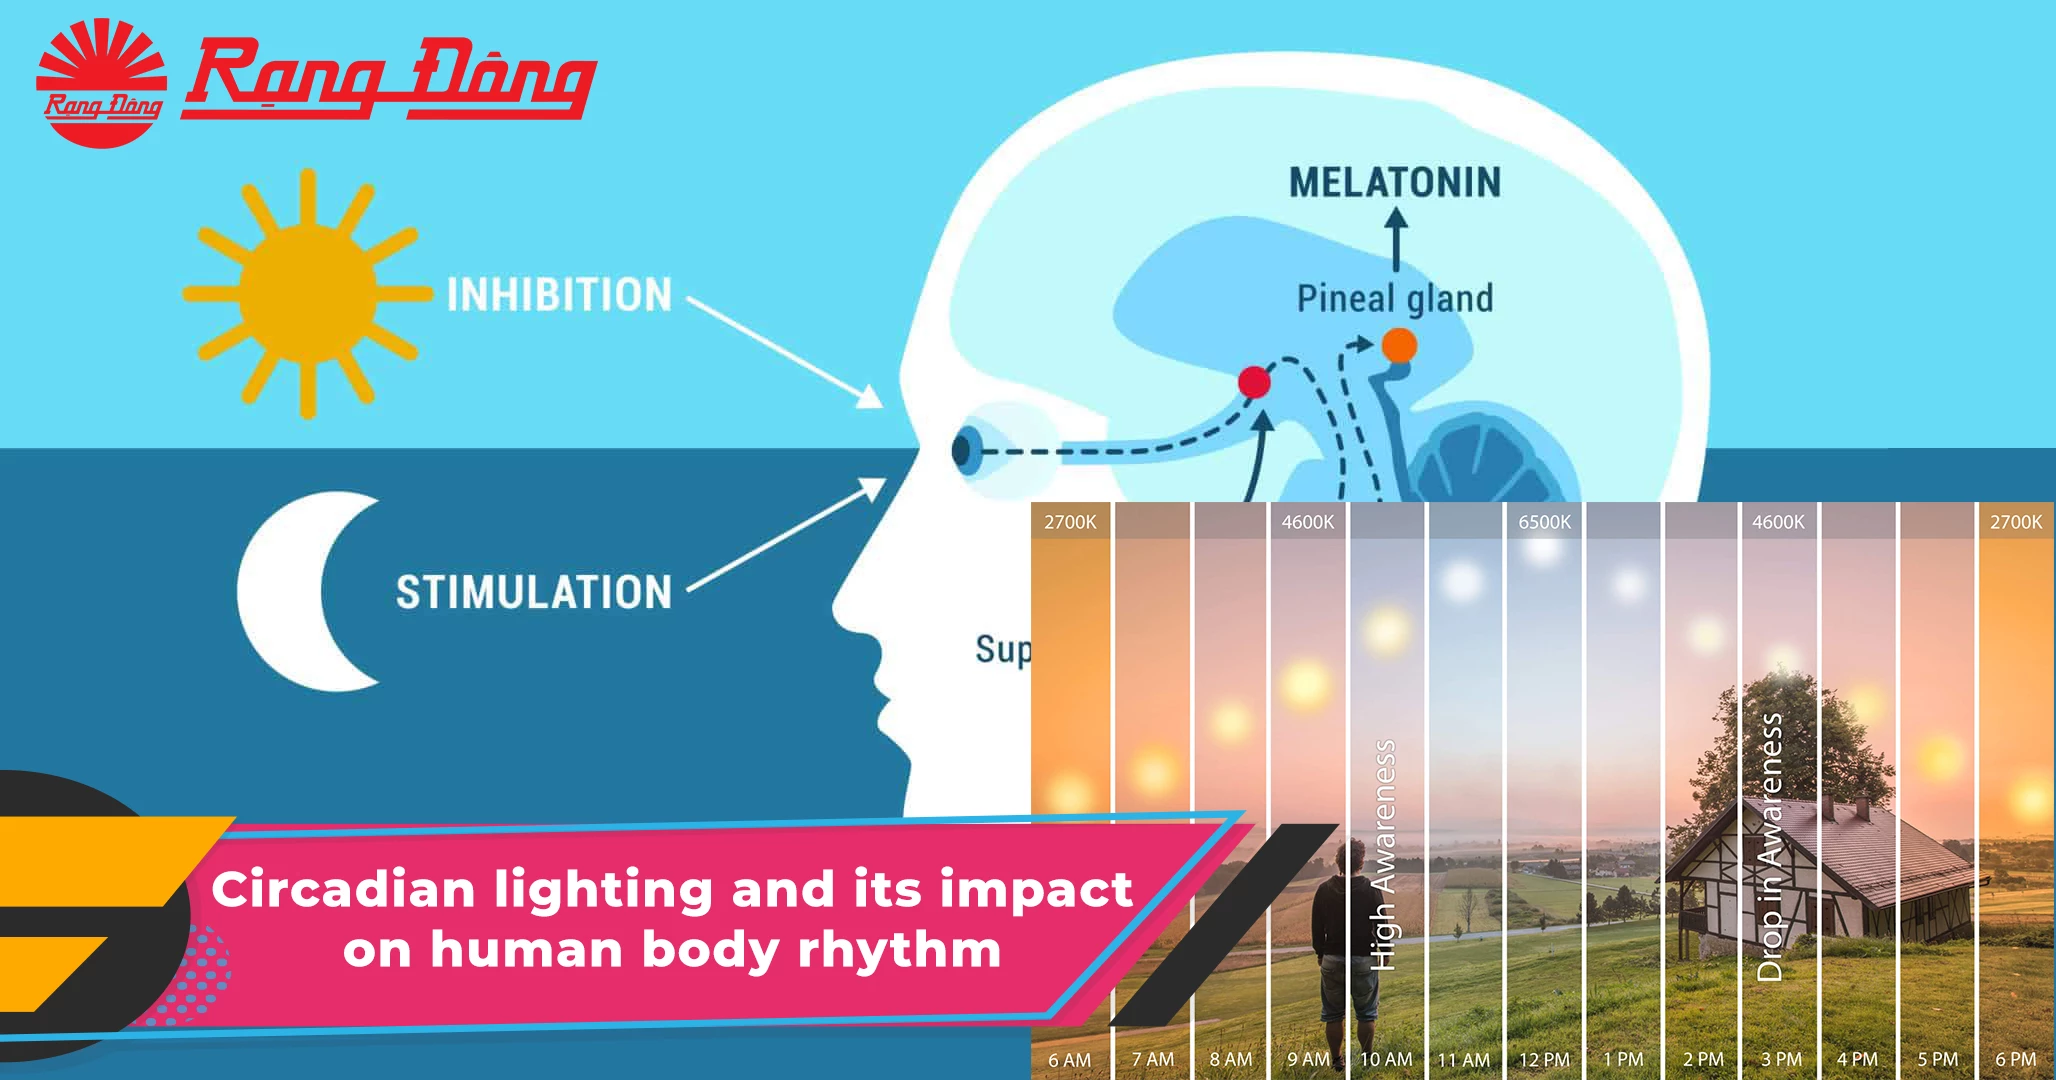 Circadian lighting and its impact on human body rhythm